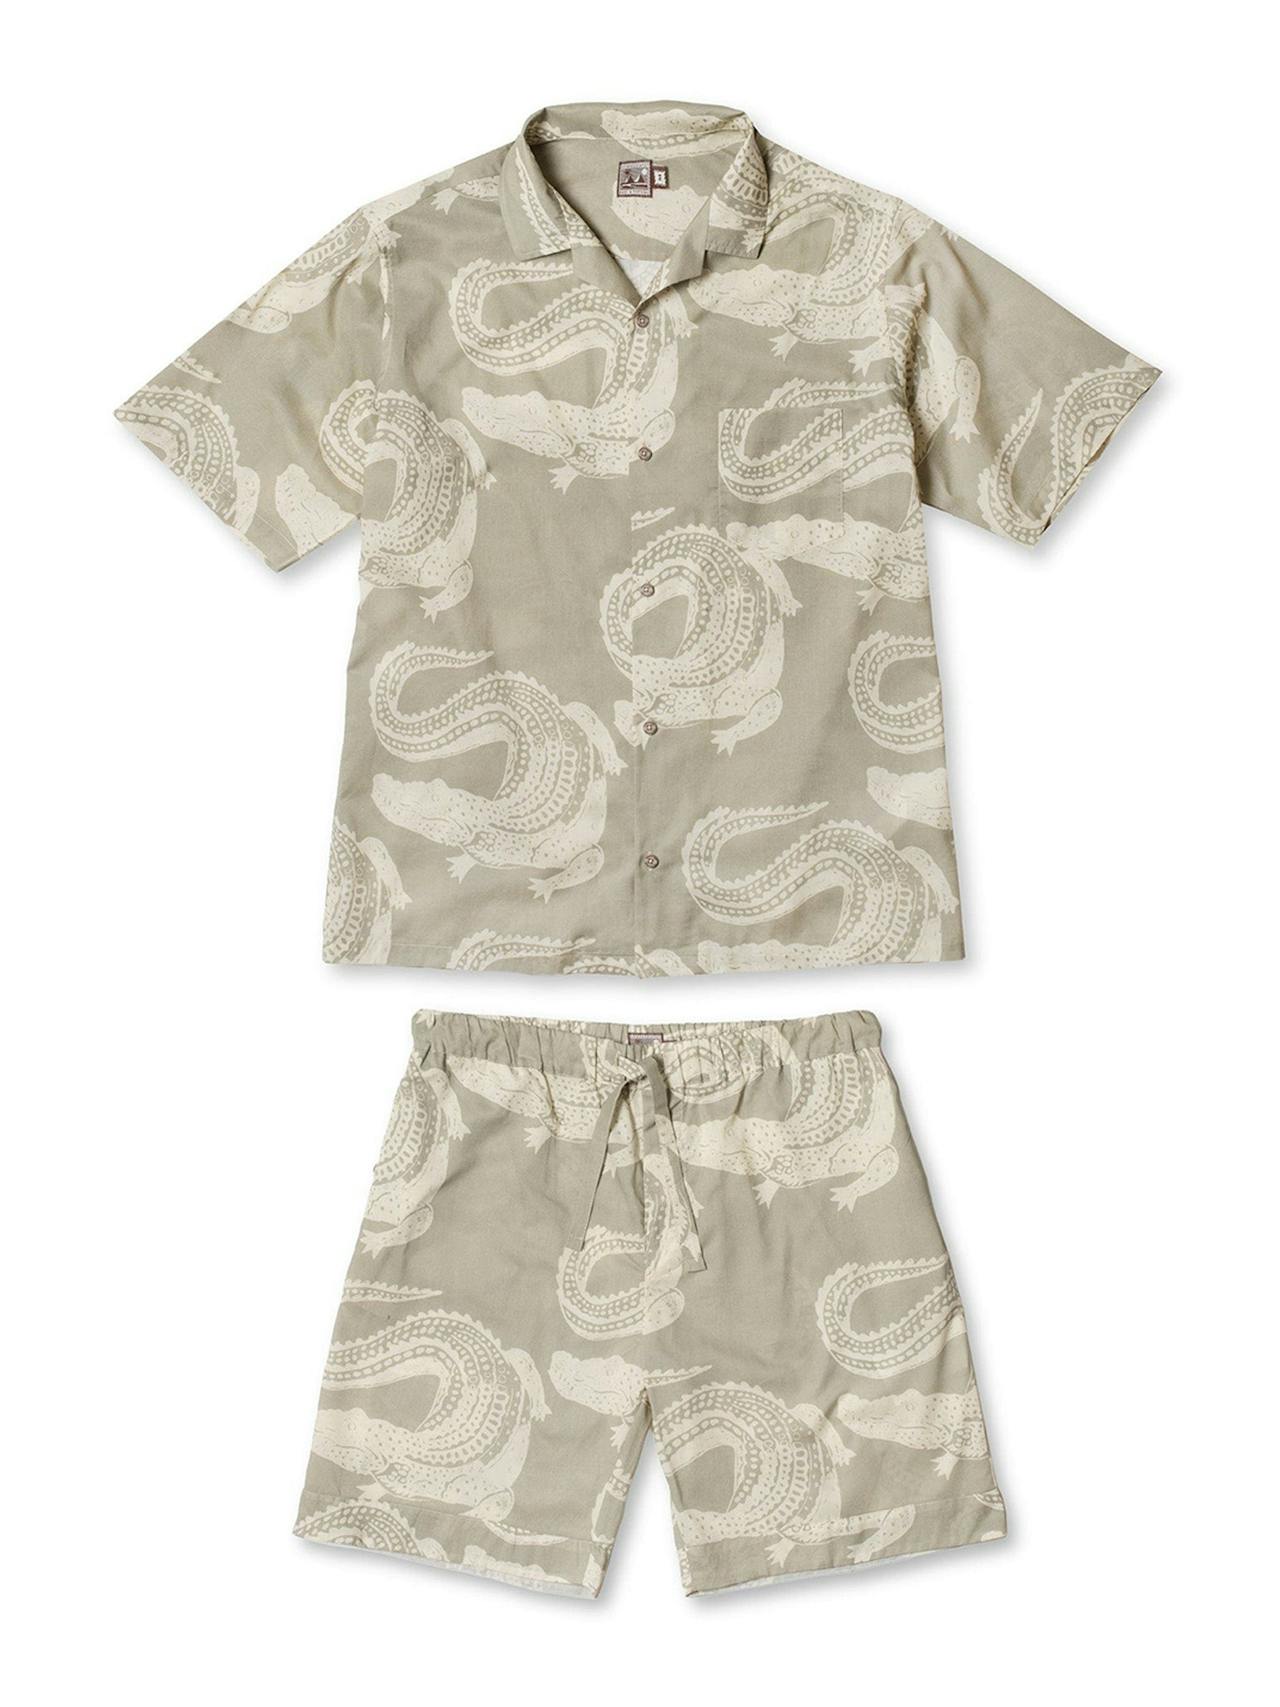 Men’s Croc print cuban shorts pyjama set